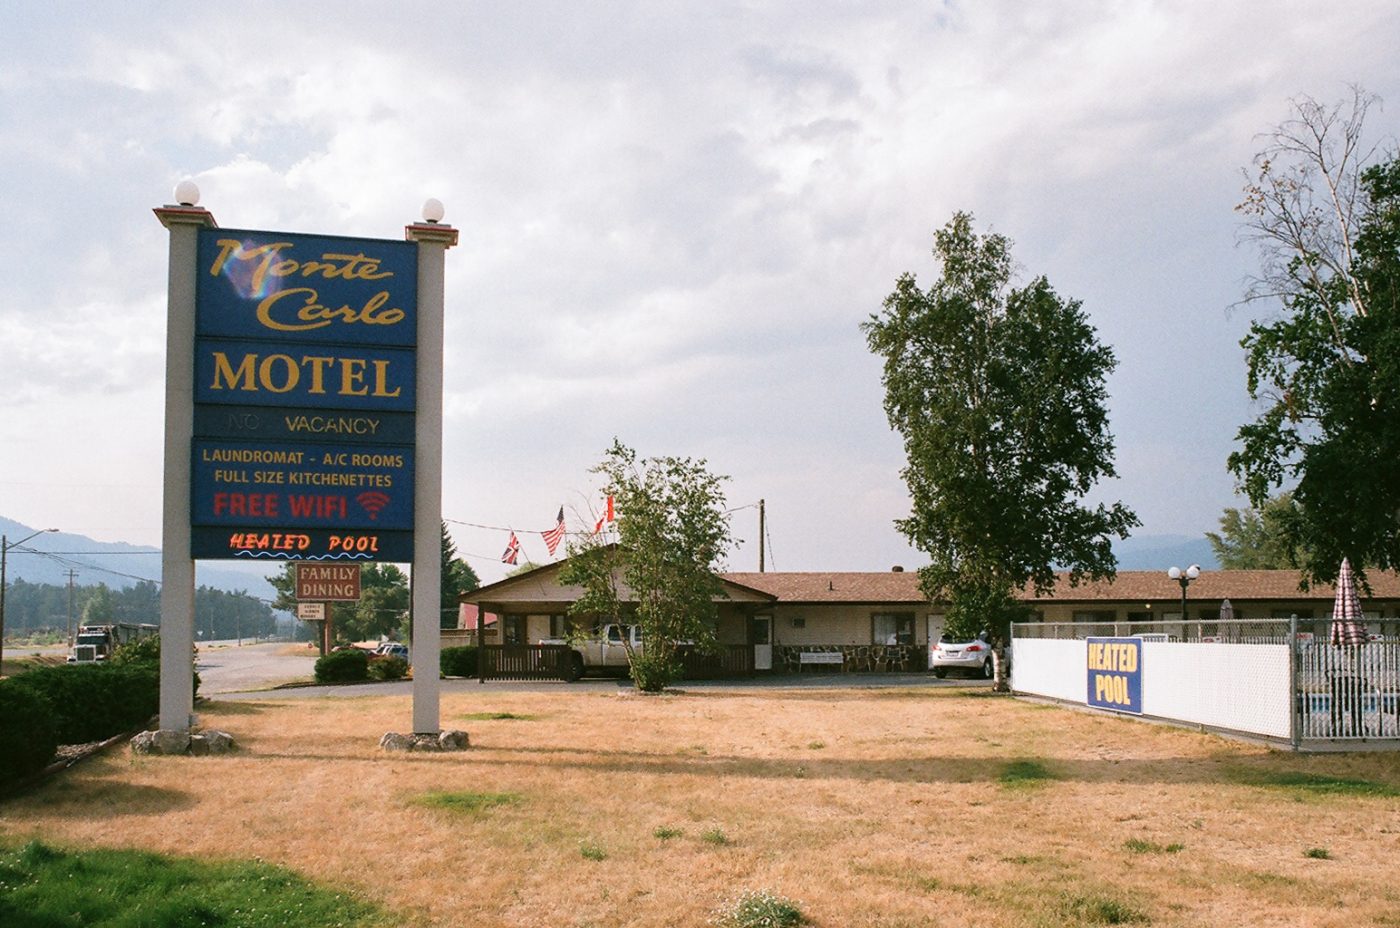 roadside motel in British Columbia, Canada 